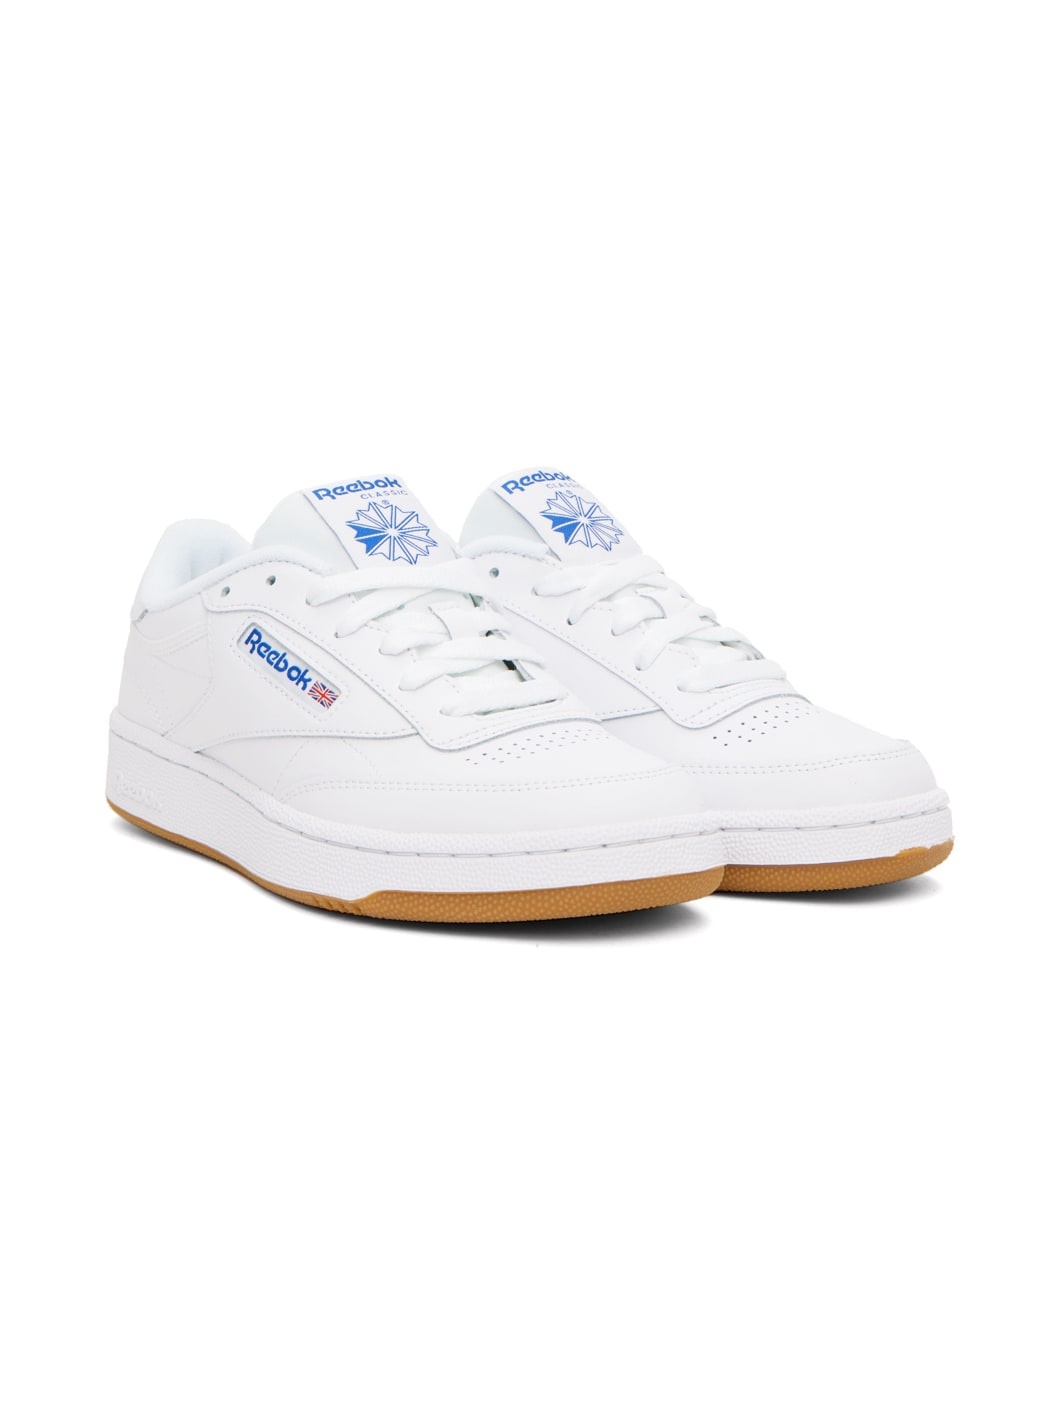 White Club C 85 Sneakers - 4